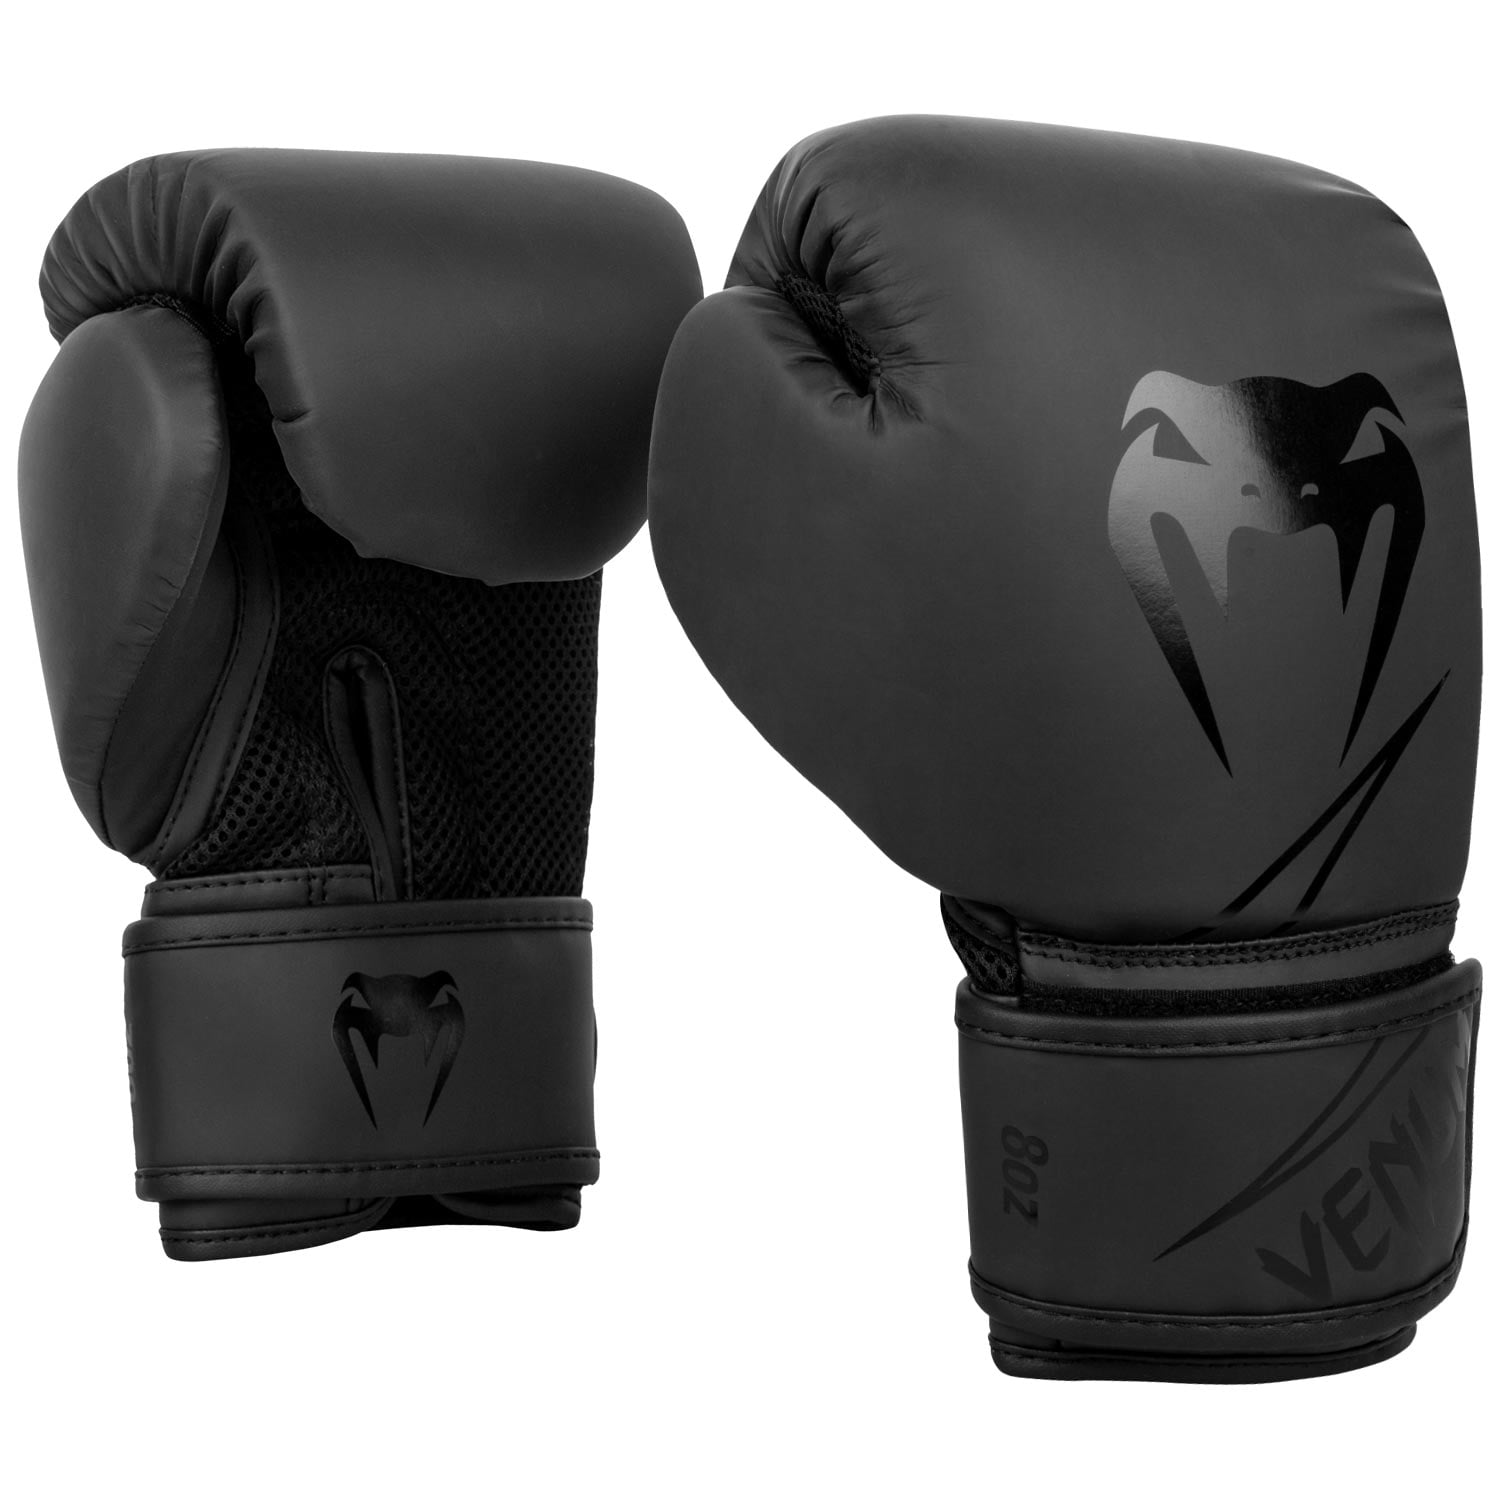 viering Omleiding Situatie Venum Classic Kids Boxing Gloves - Black/Black - 8 oz - Walmart.com